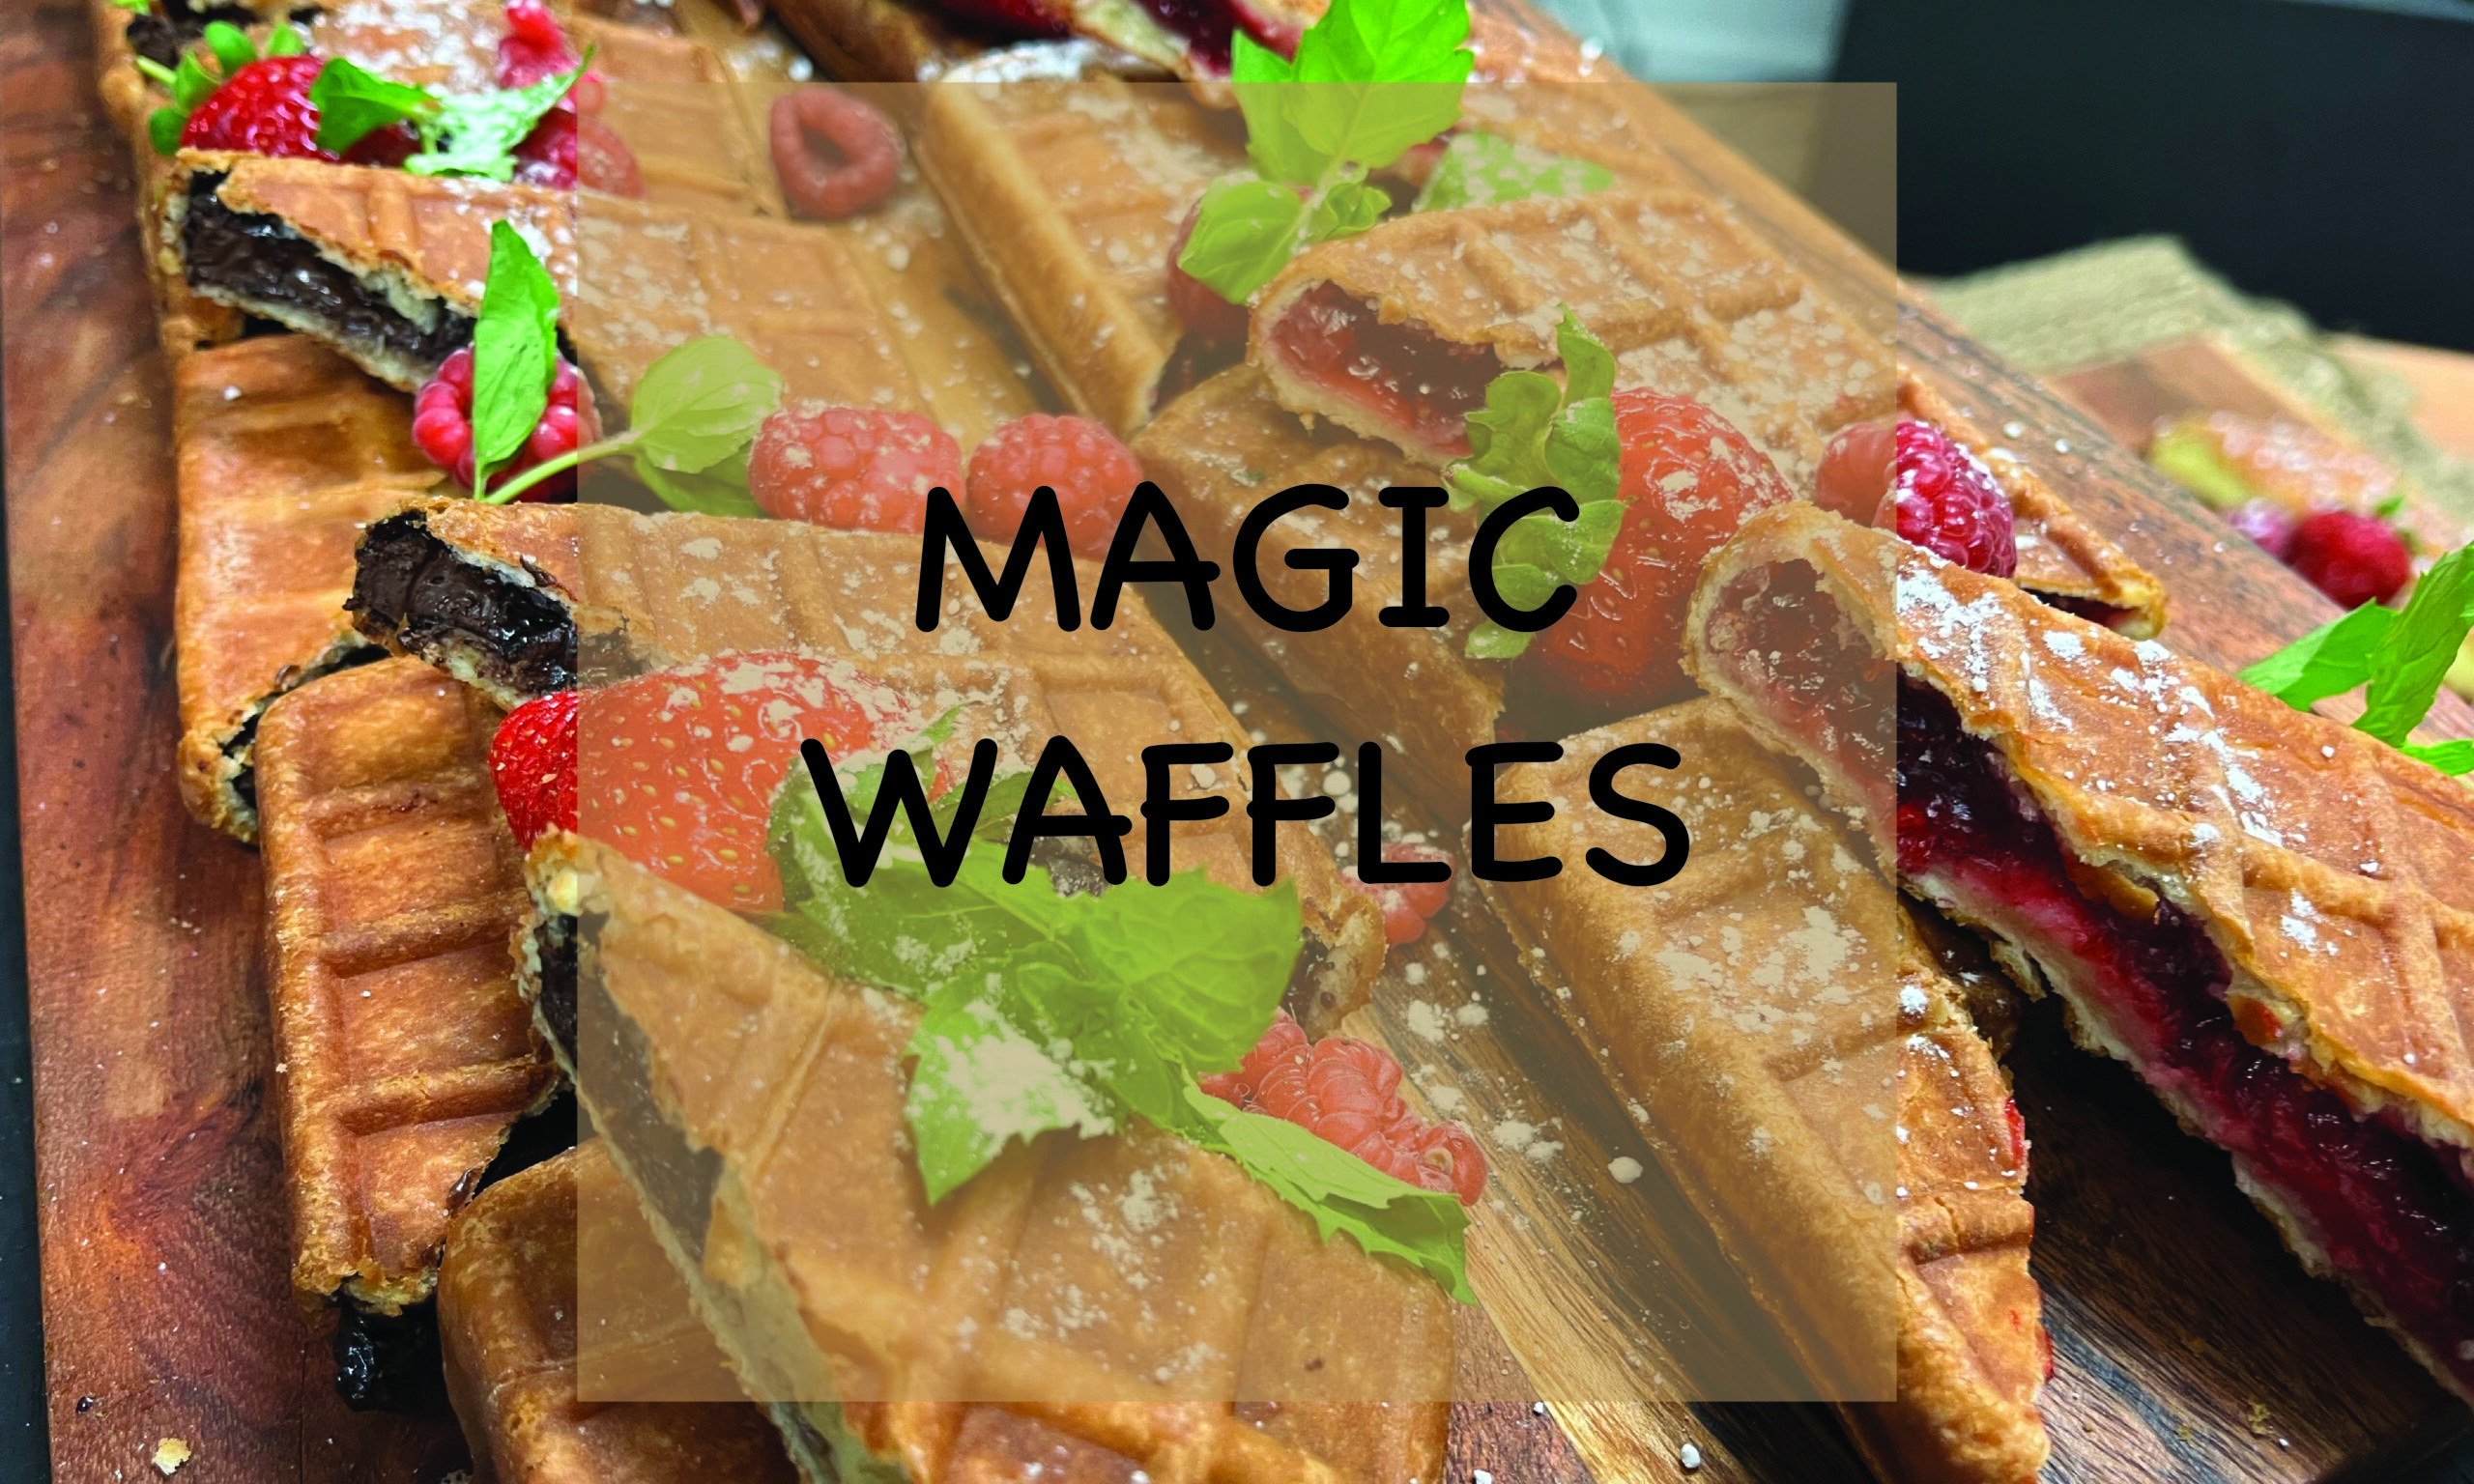 Magic Waffles